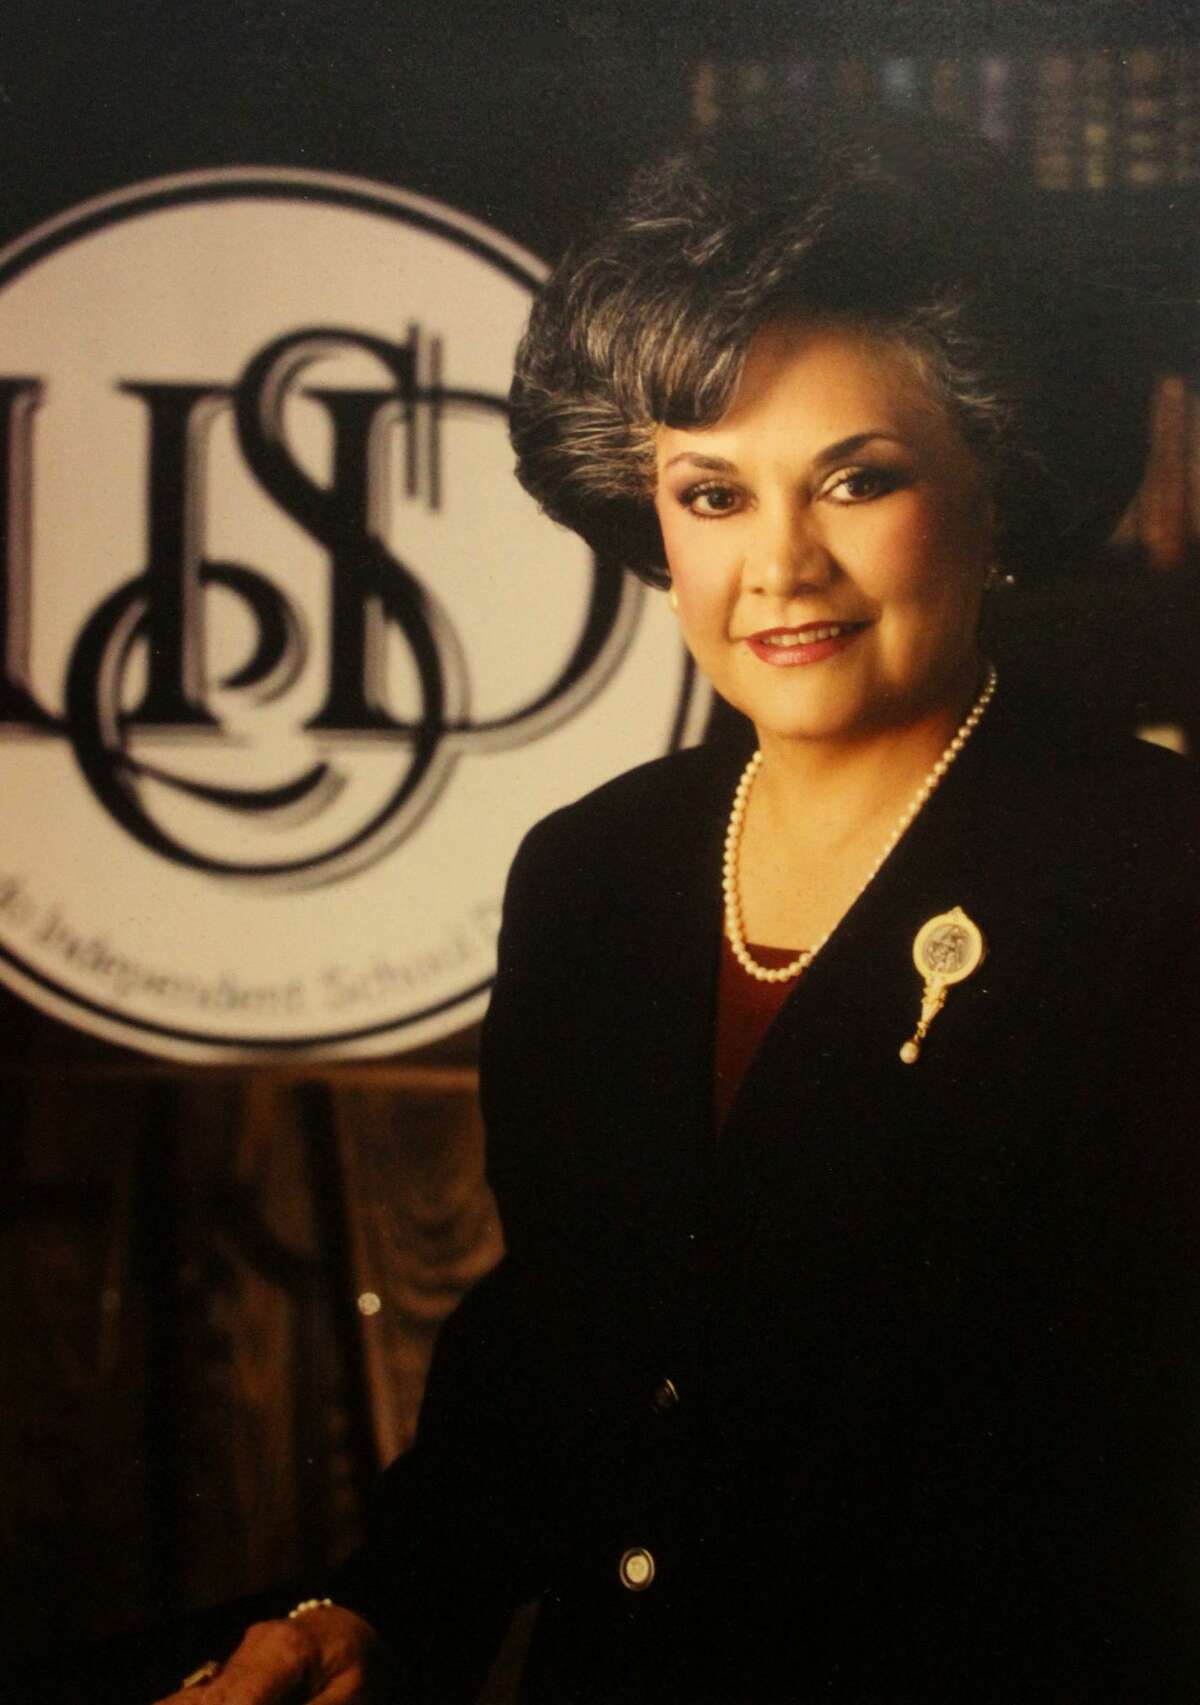 Former Laredo ISD superintendent Garciela Chavez Ramirez passed away Monday. Ramirez served as the district’s first female superintendent in 1995.